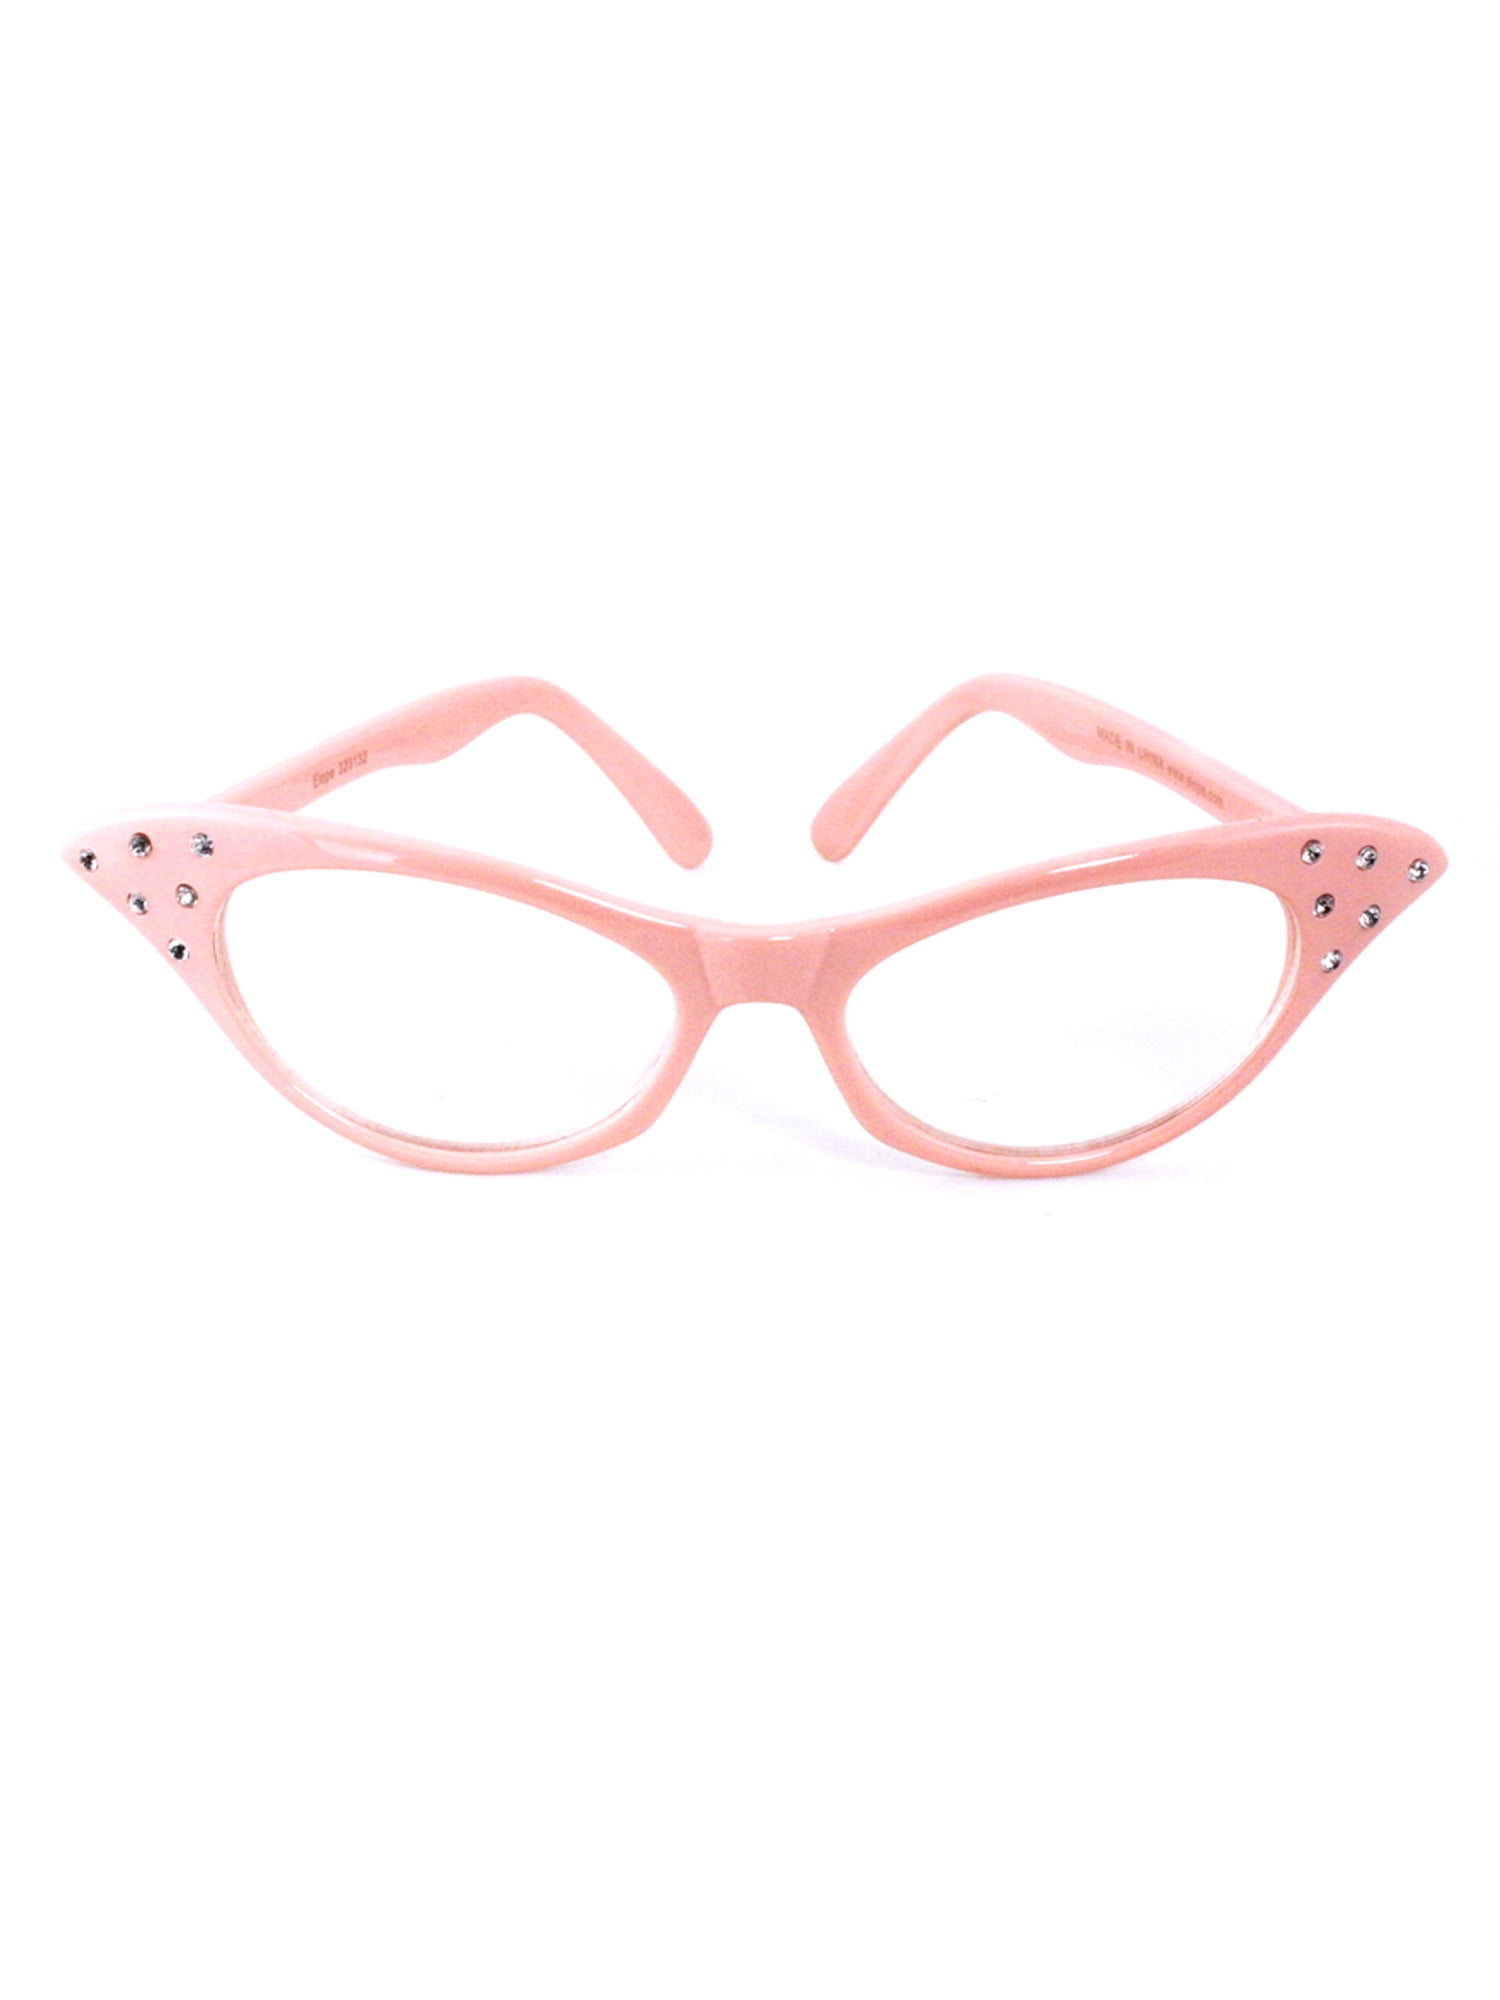 Hey Viv Retro Fun Colors 50s Style Cat Eye Glasses w Rhinestones Clear Lens